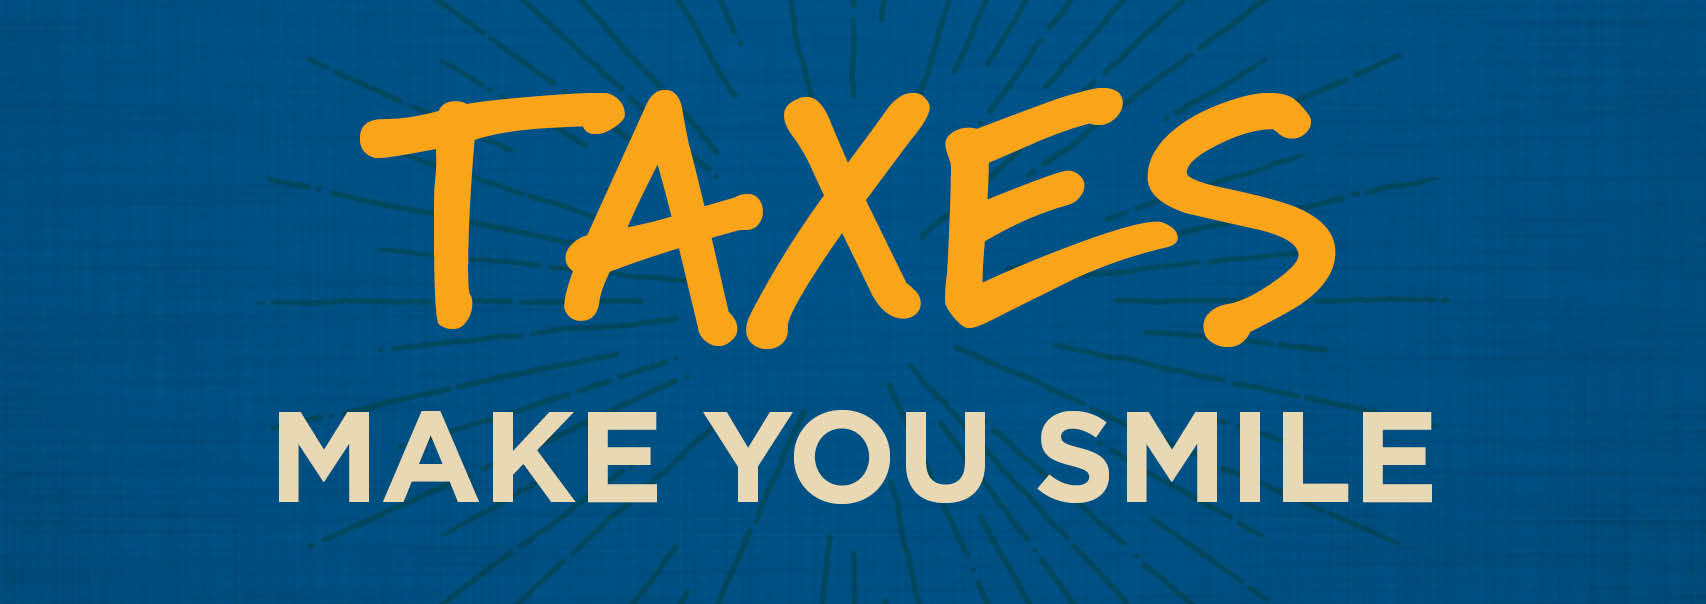 Can Taxes Make You Smile?